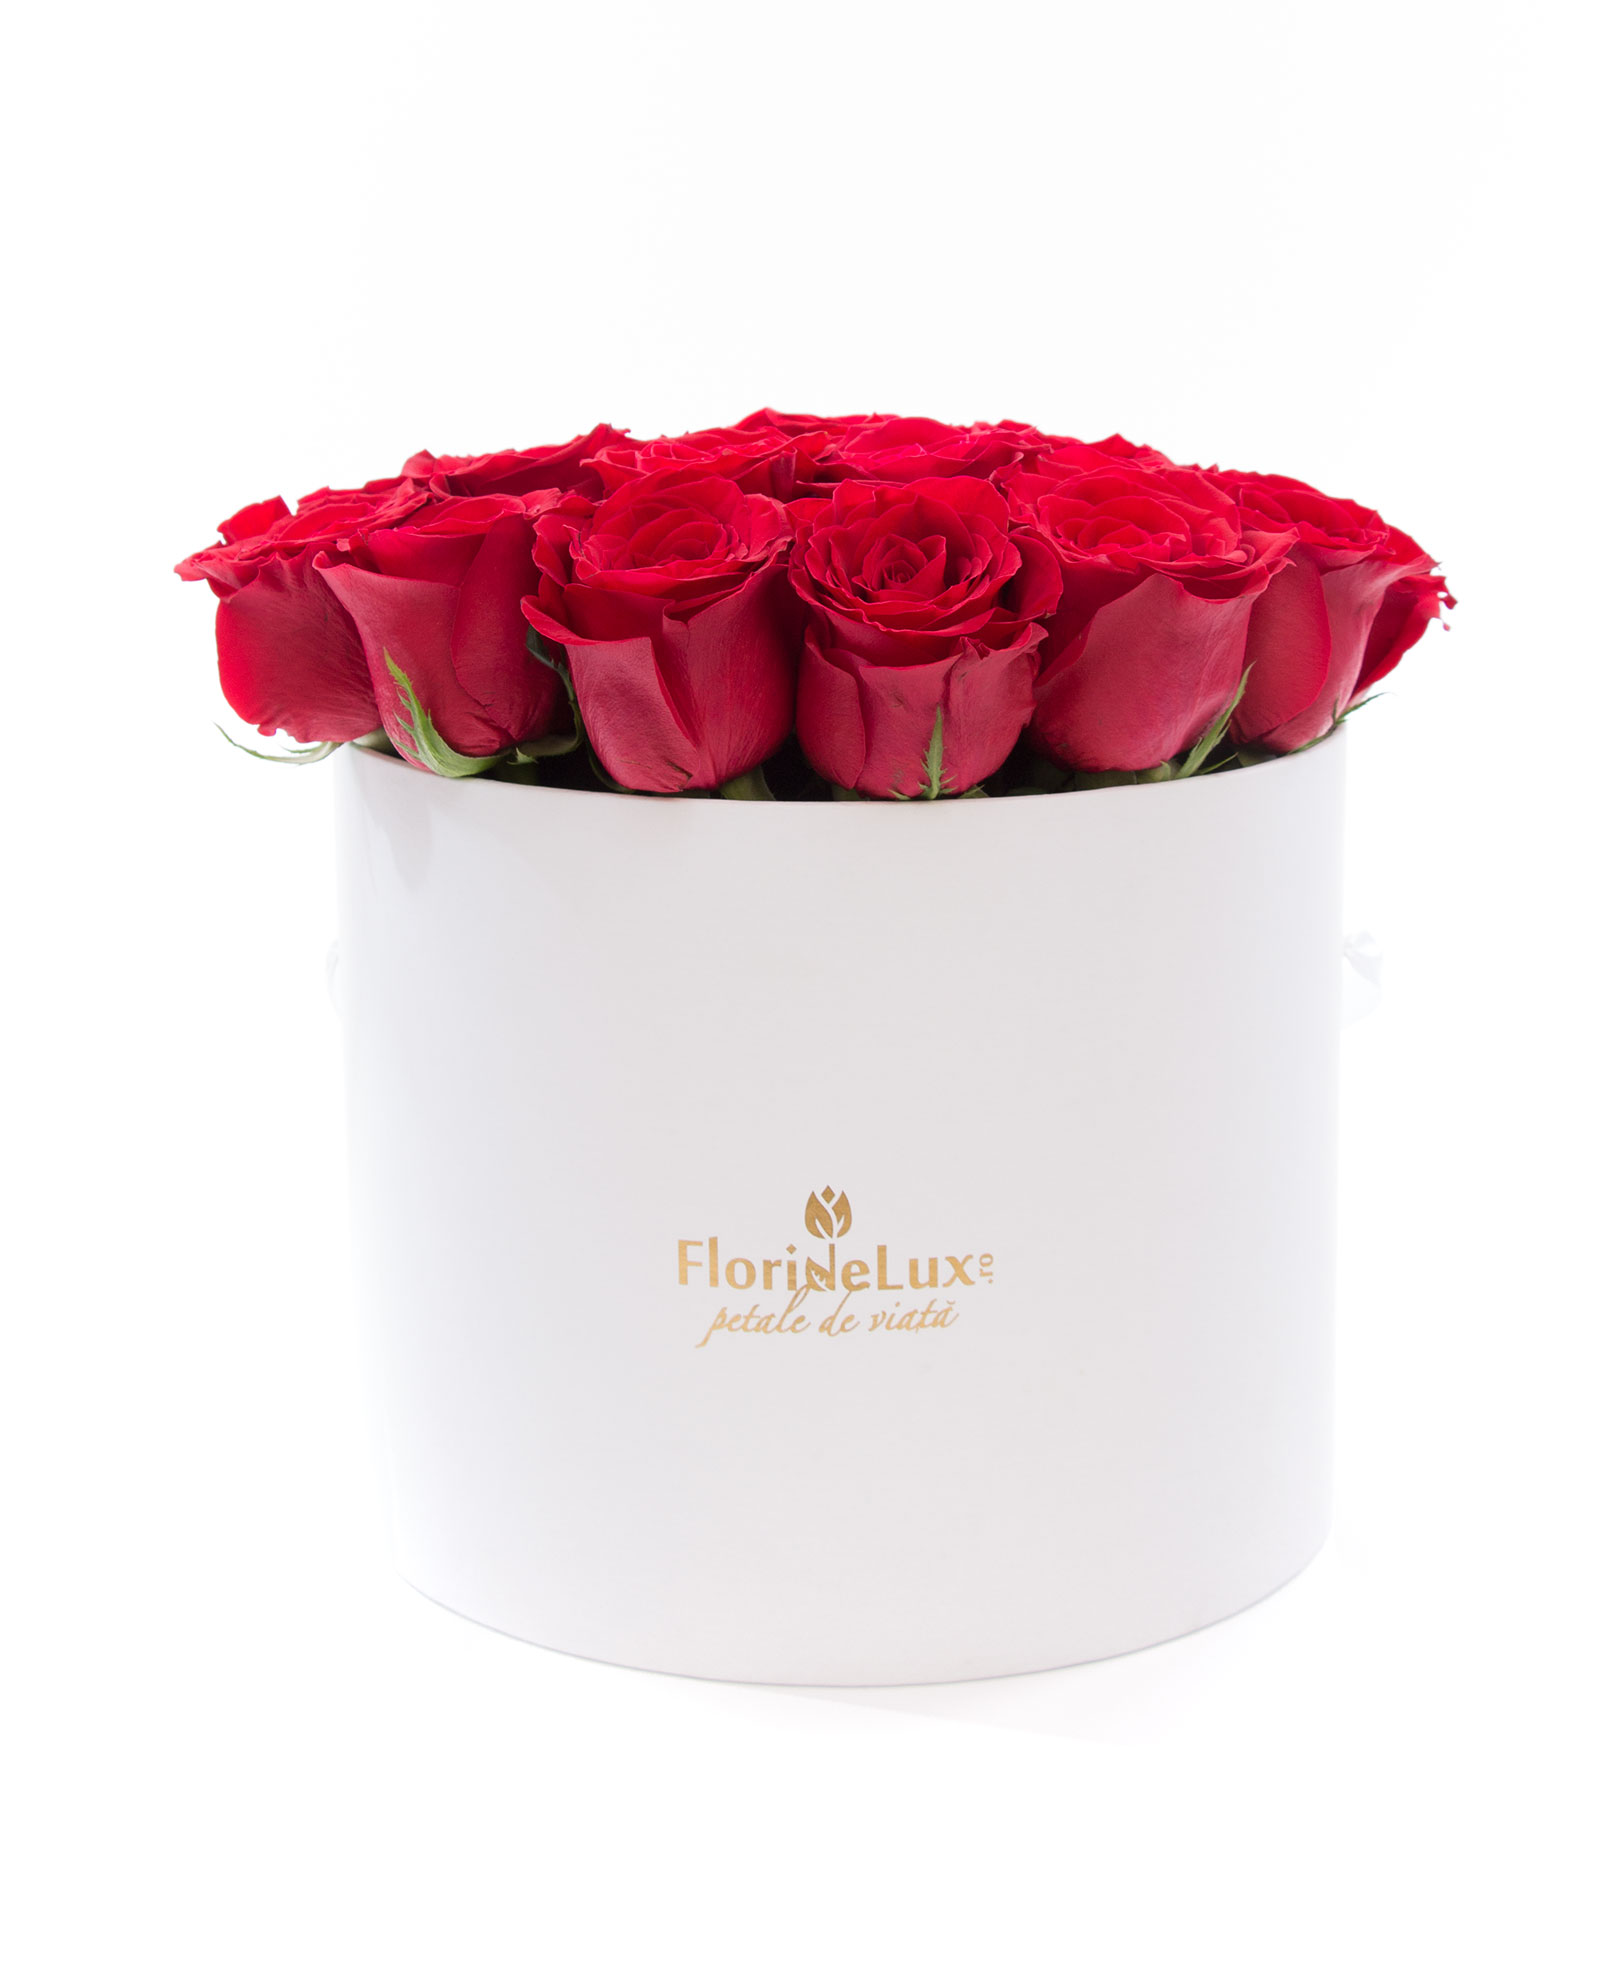 Cutie romantica trandafiri rosii si vin Tralca